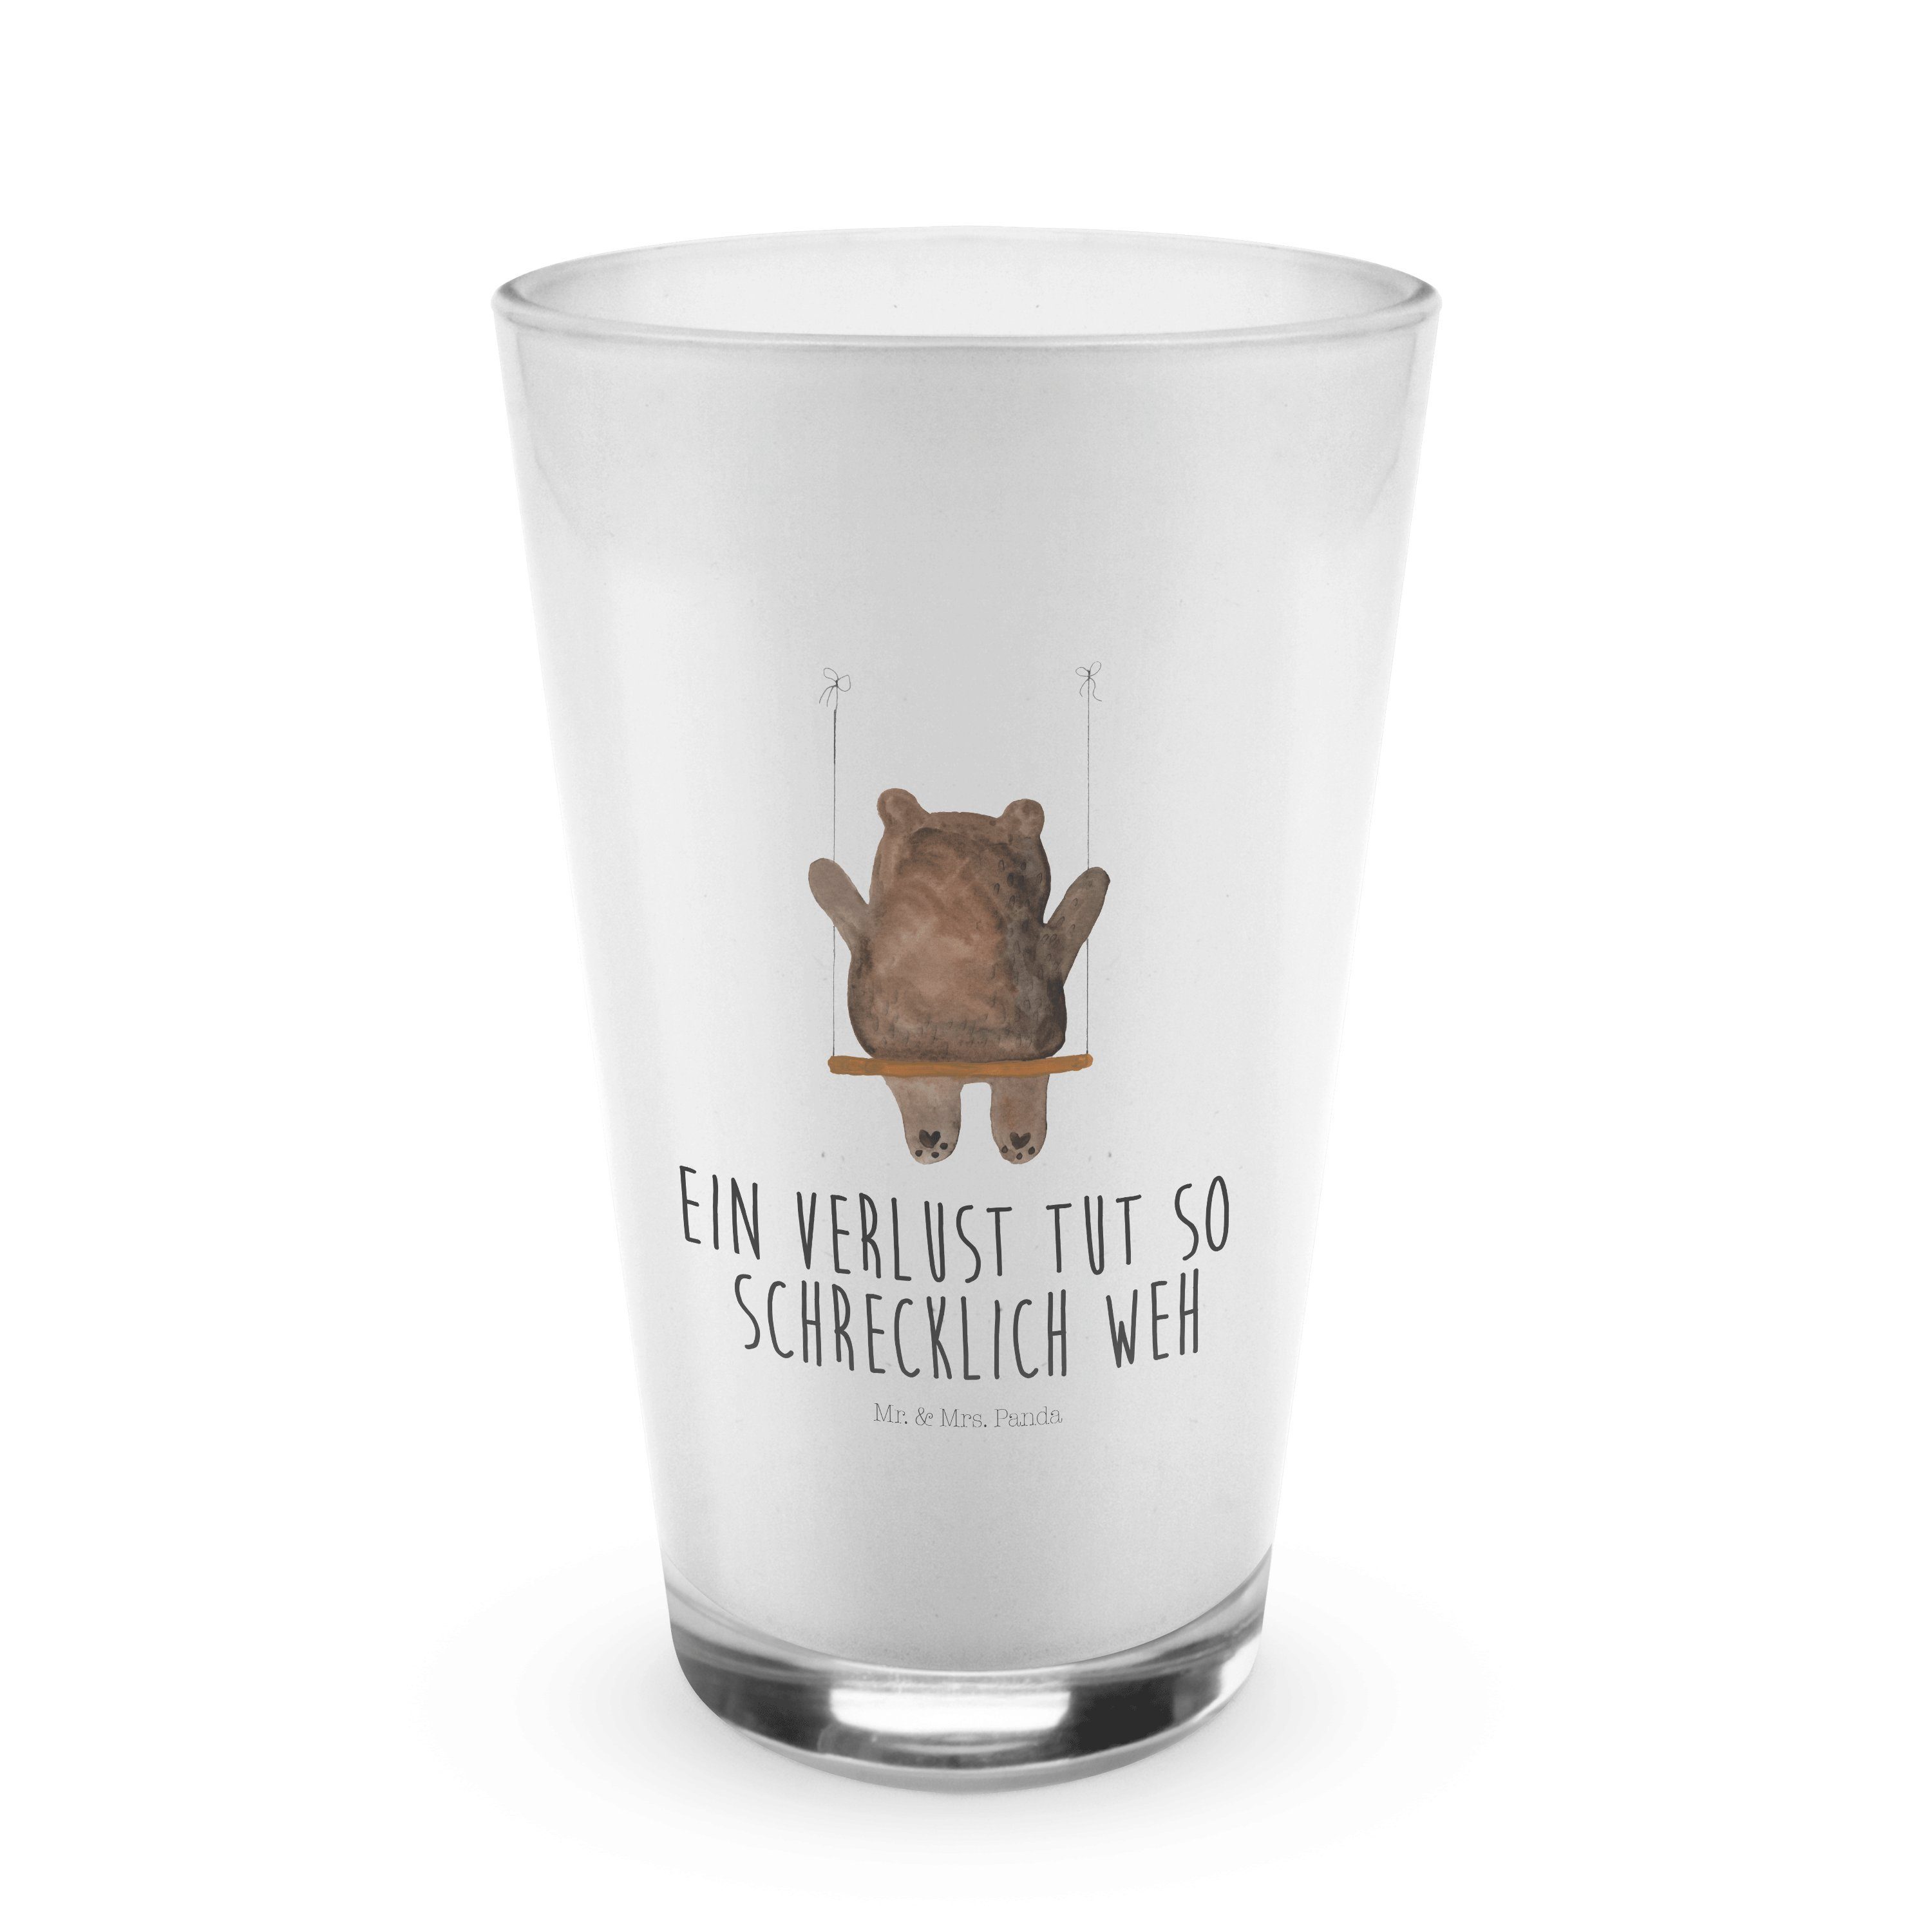 Mr. & Mrs. Panda Glas Teddybär, - - Bär Premium Cappuccino Gla, Geschenk, Schaukel Glas Glas, Transparent